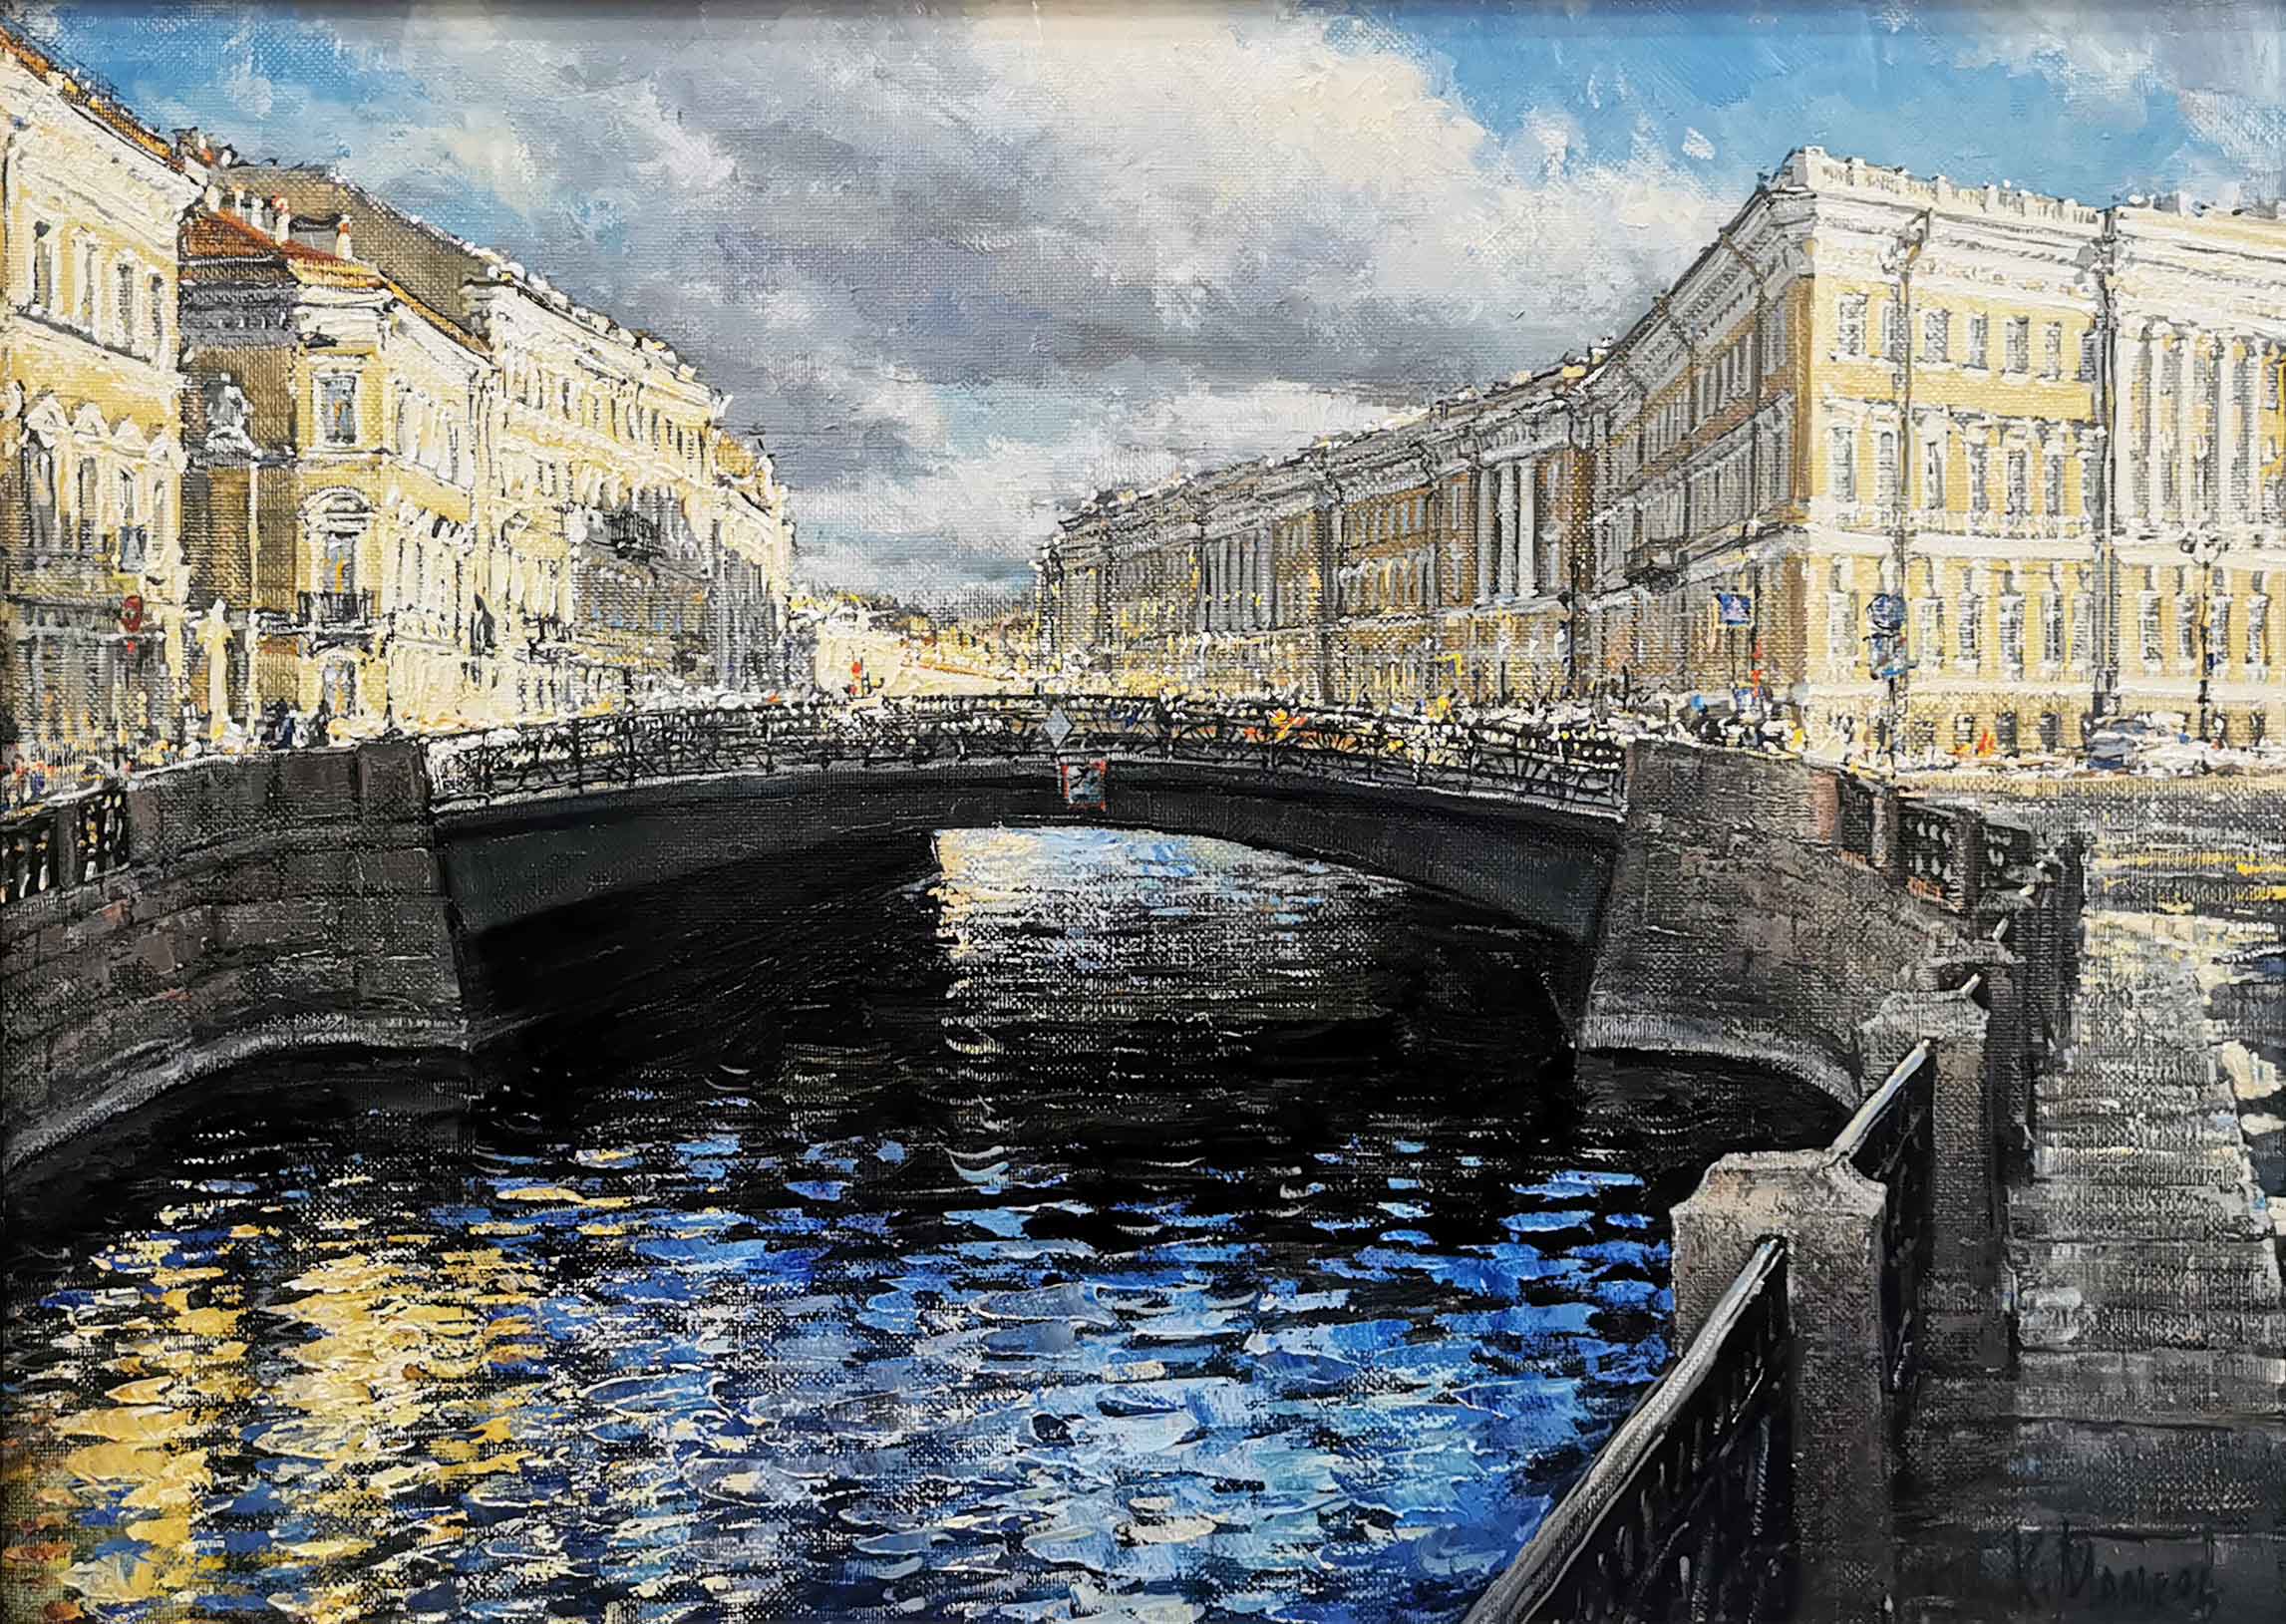  - 1, Kirill Malkov, Buy the painting Oil